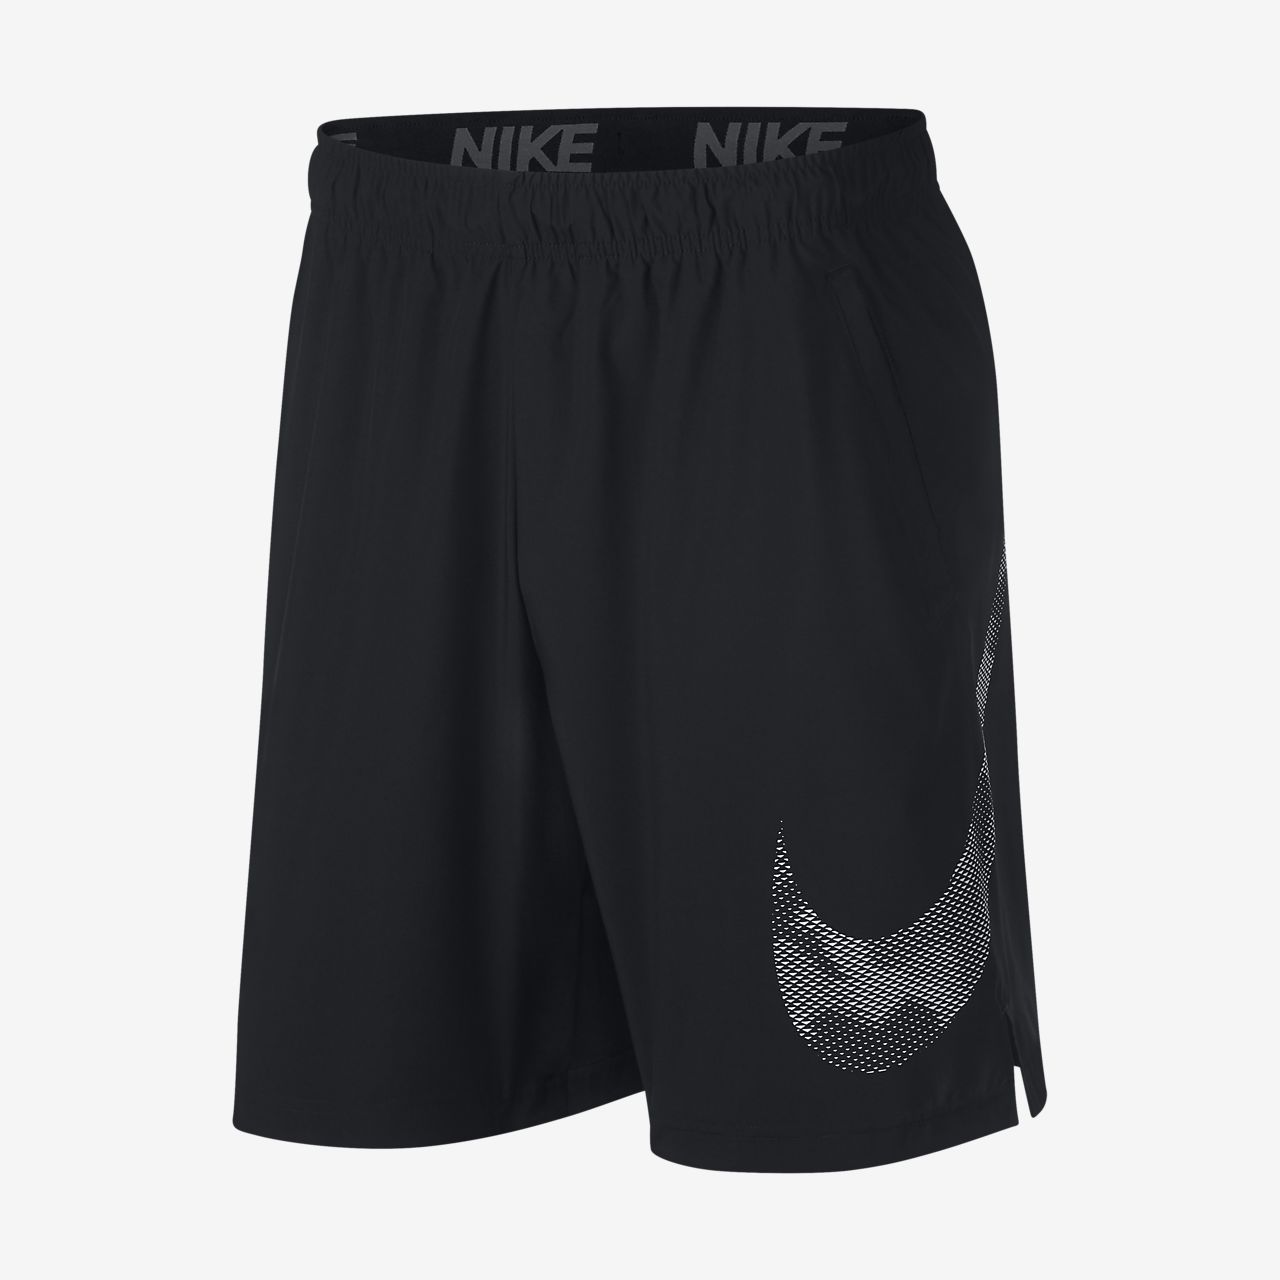 Nike Flex Men's Woven Training Shorts. Nike SG